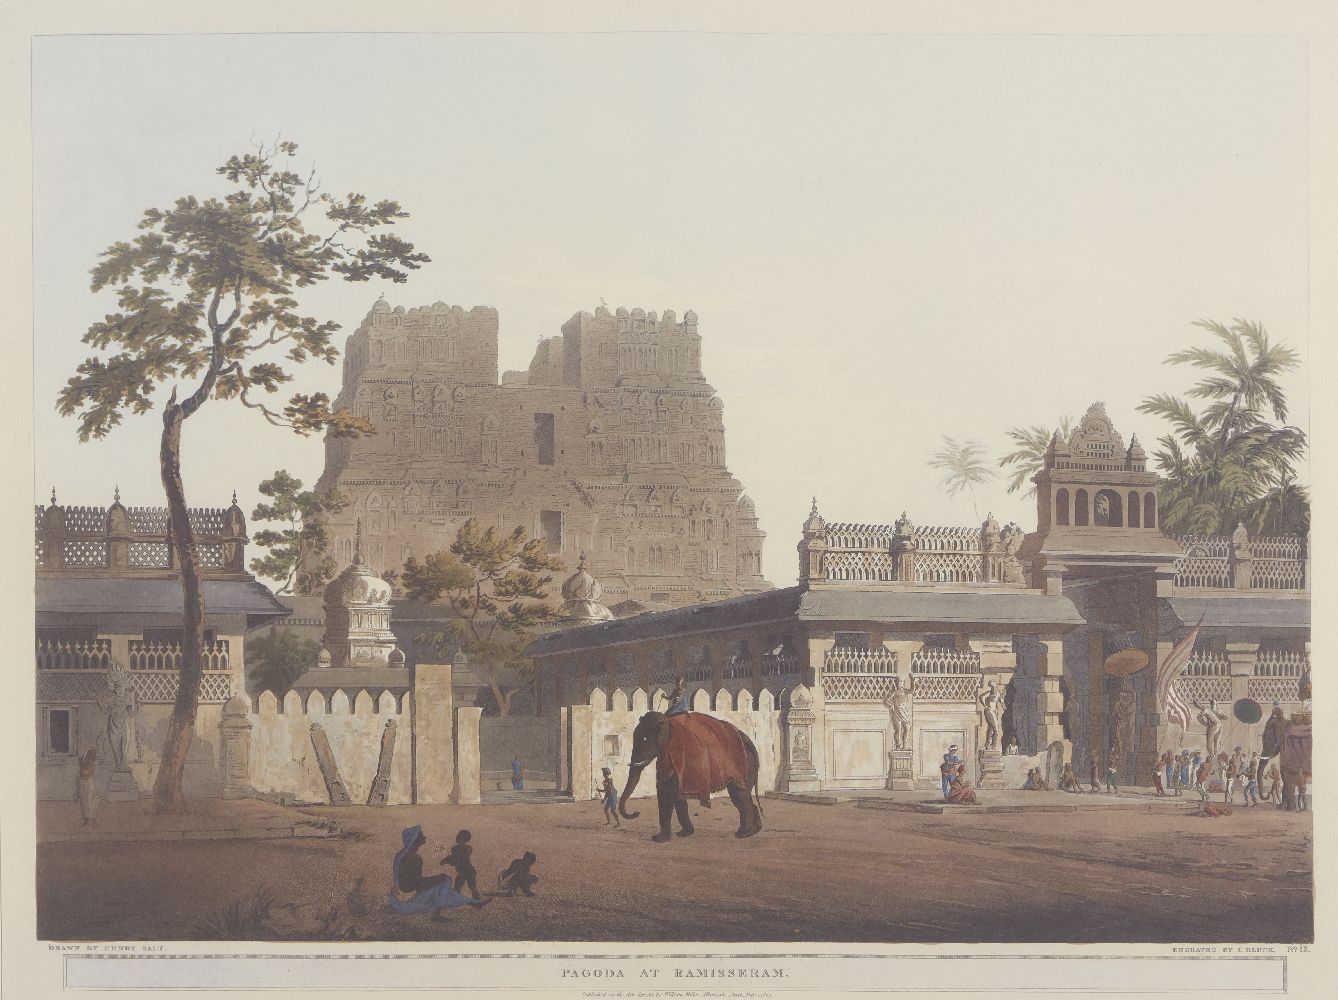 Henry Salt (British, 1780 - 1827), "Pagoda at Ramisseram", engraving with aquatint on paper,